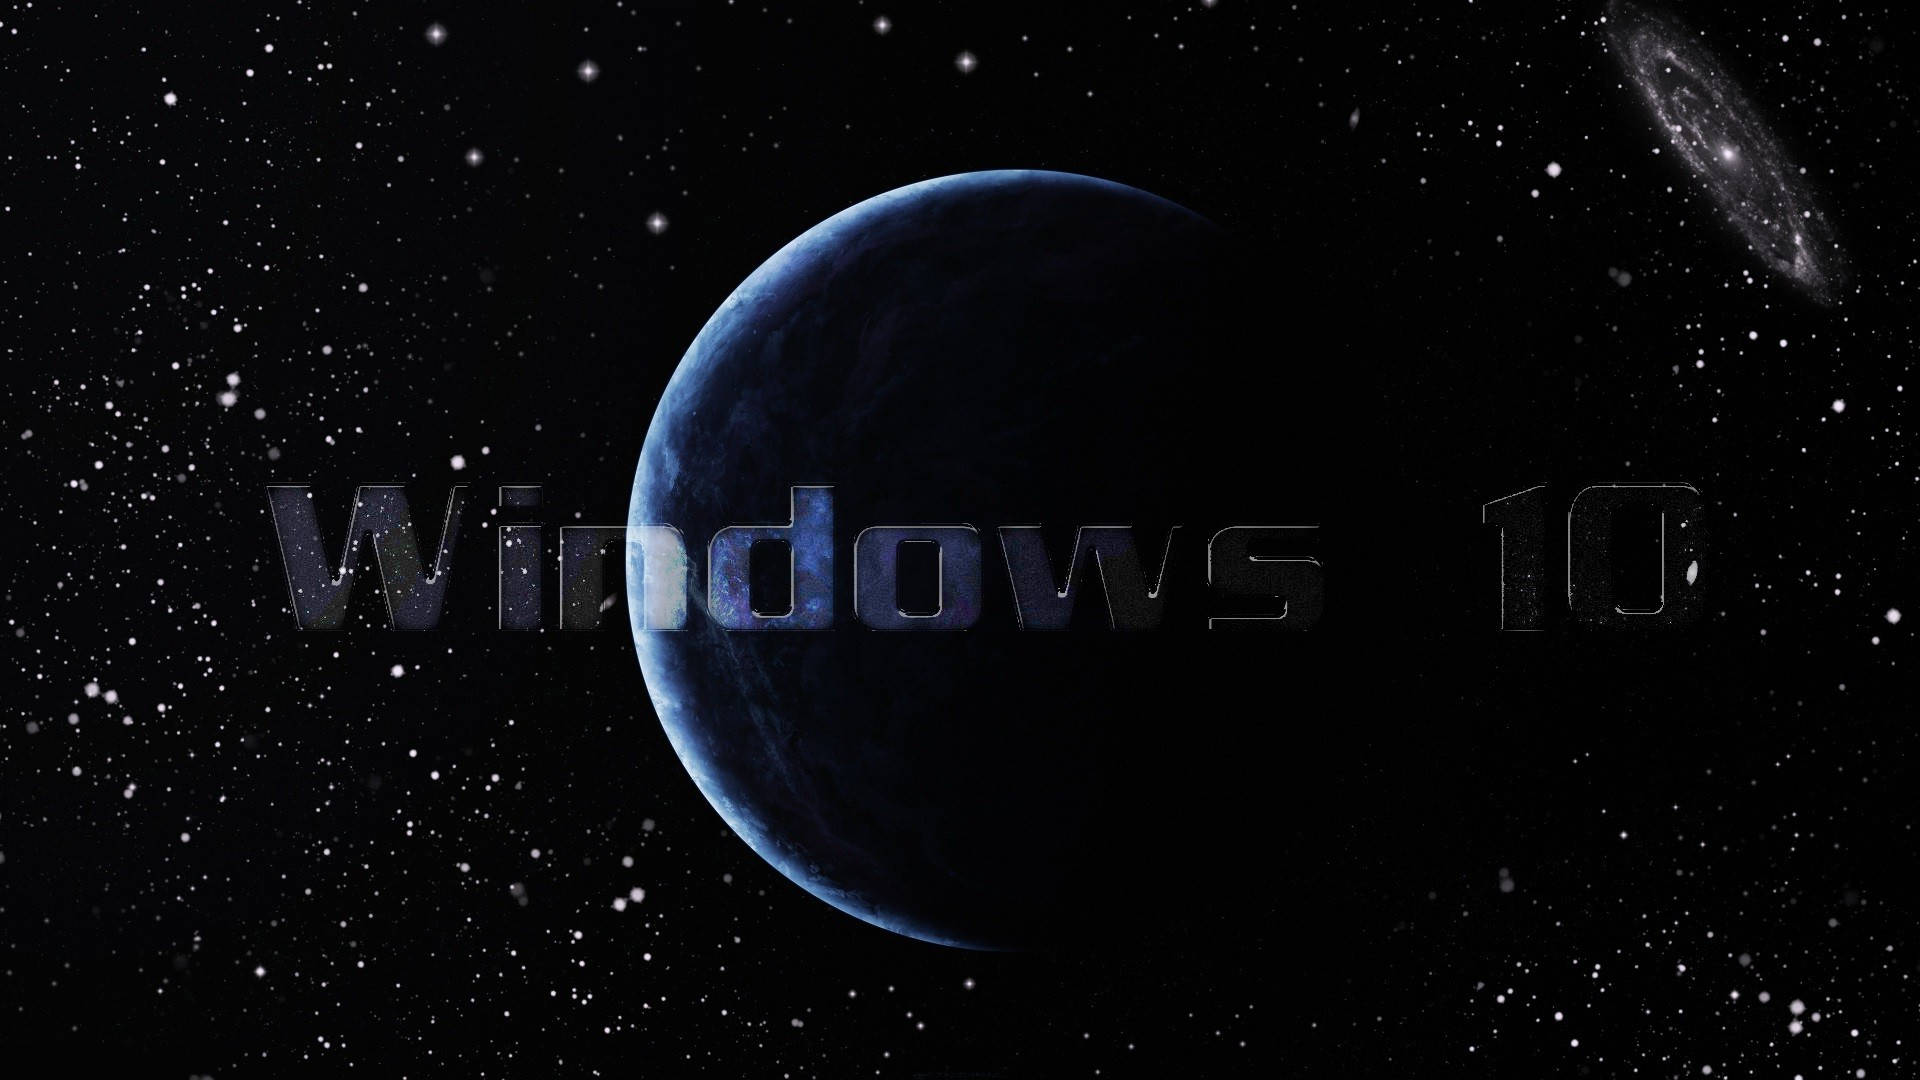 Black Windows 10 Hd Space Background